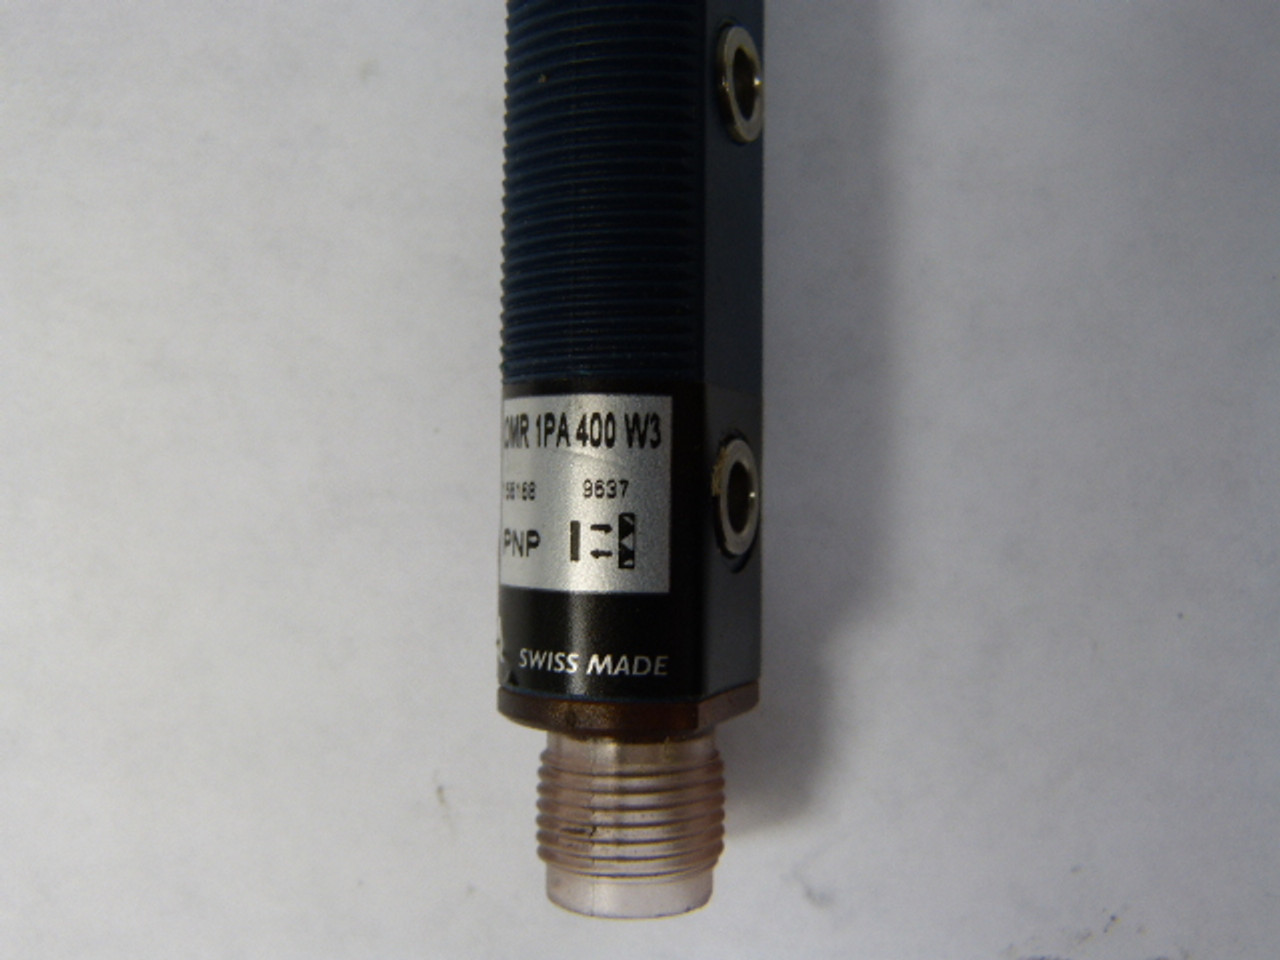 Elesta OMR-1PA-400-W3 Photoelectric Sensor 10-30VDC 200mA DAMAGED LABEL USED